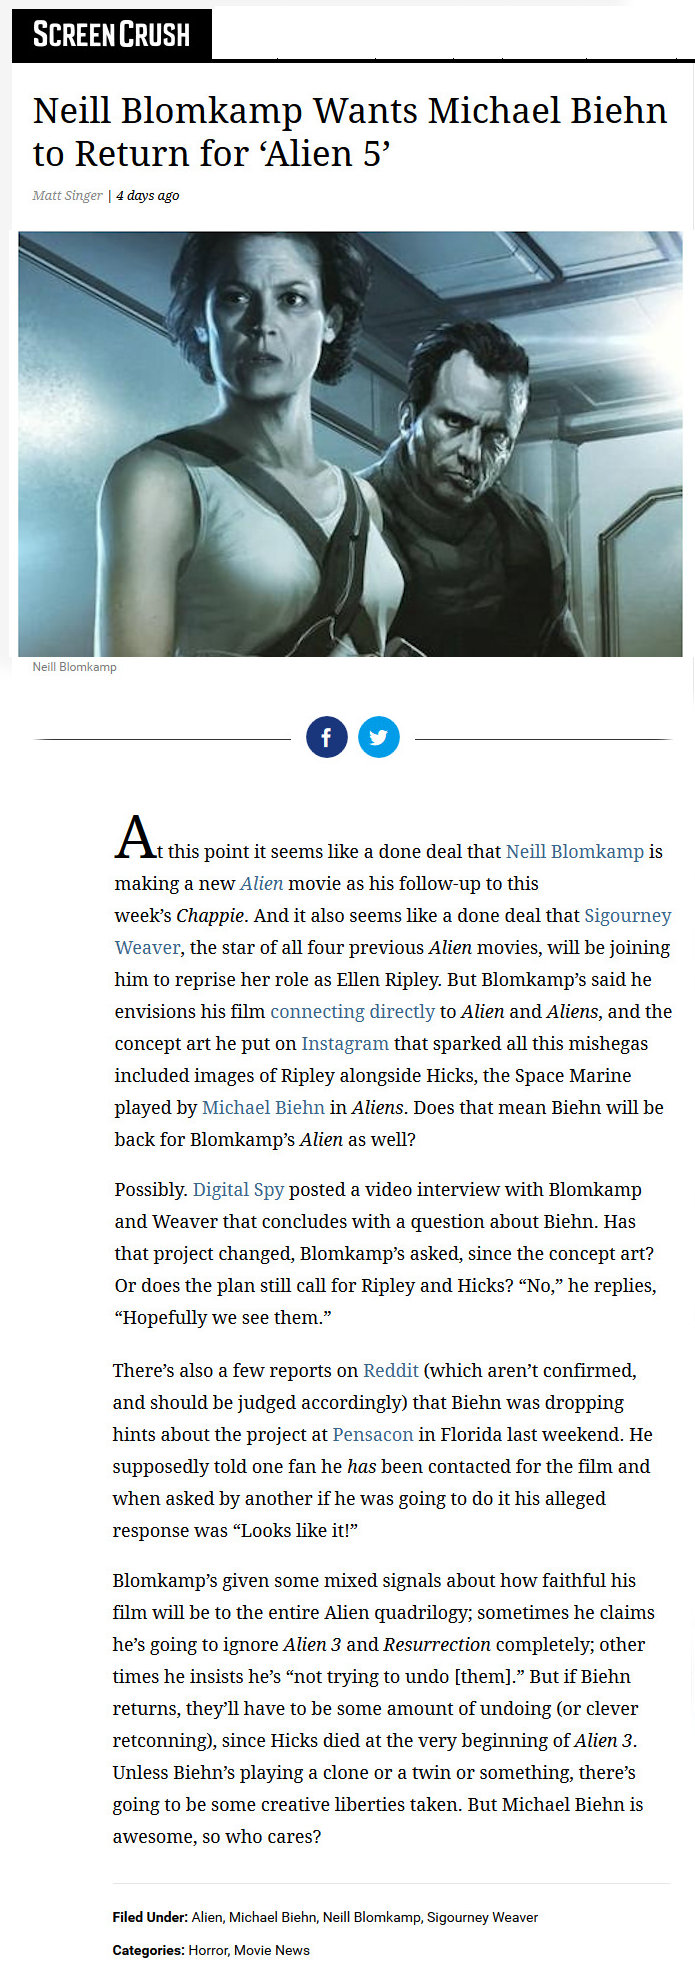 Neill Blomkamp Wants Michael Biehn to Return For Alien
Matt Singer - Feb 2015
Screen Crush
Keywords: ;media_publicity;aliens_alien5